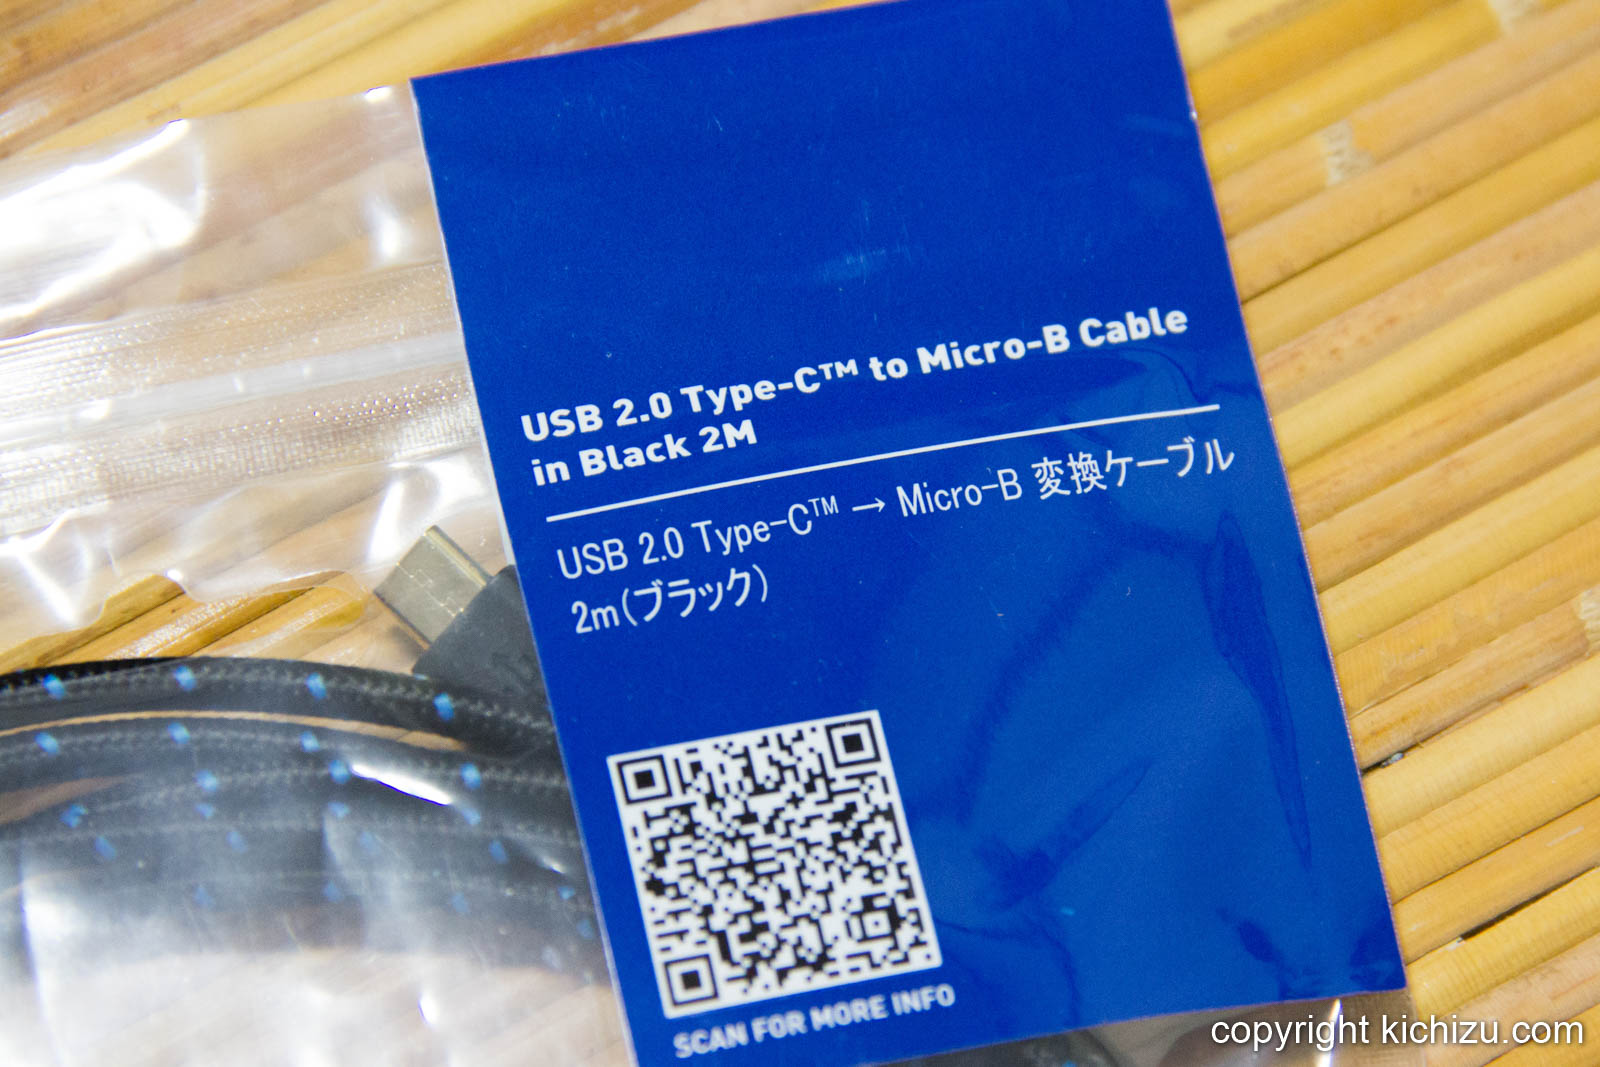 Cable Matters USB 2.0 Type C → Micro B 変換ケーブル